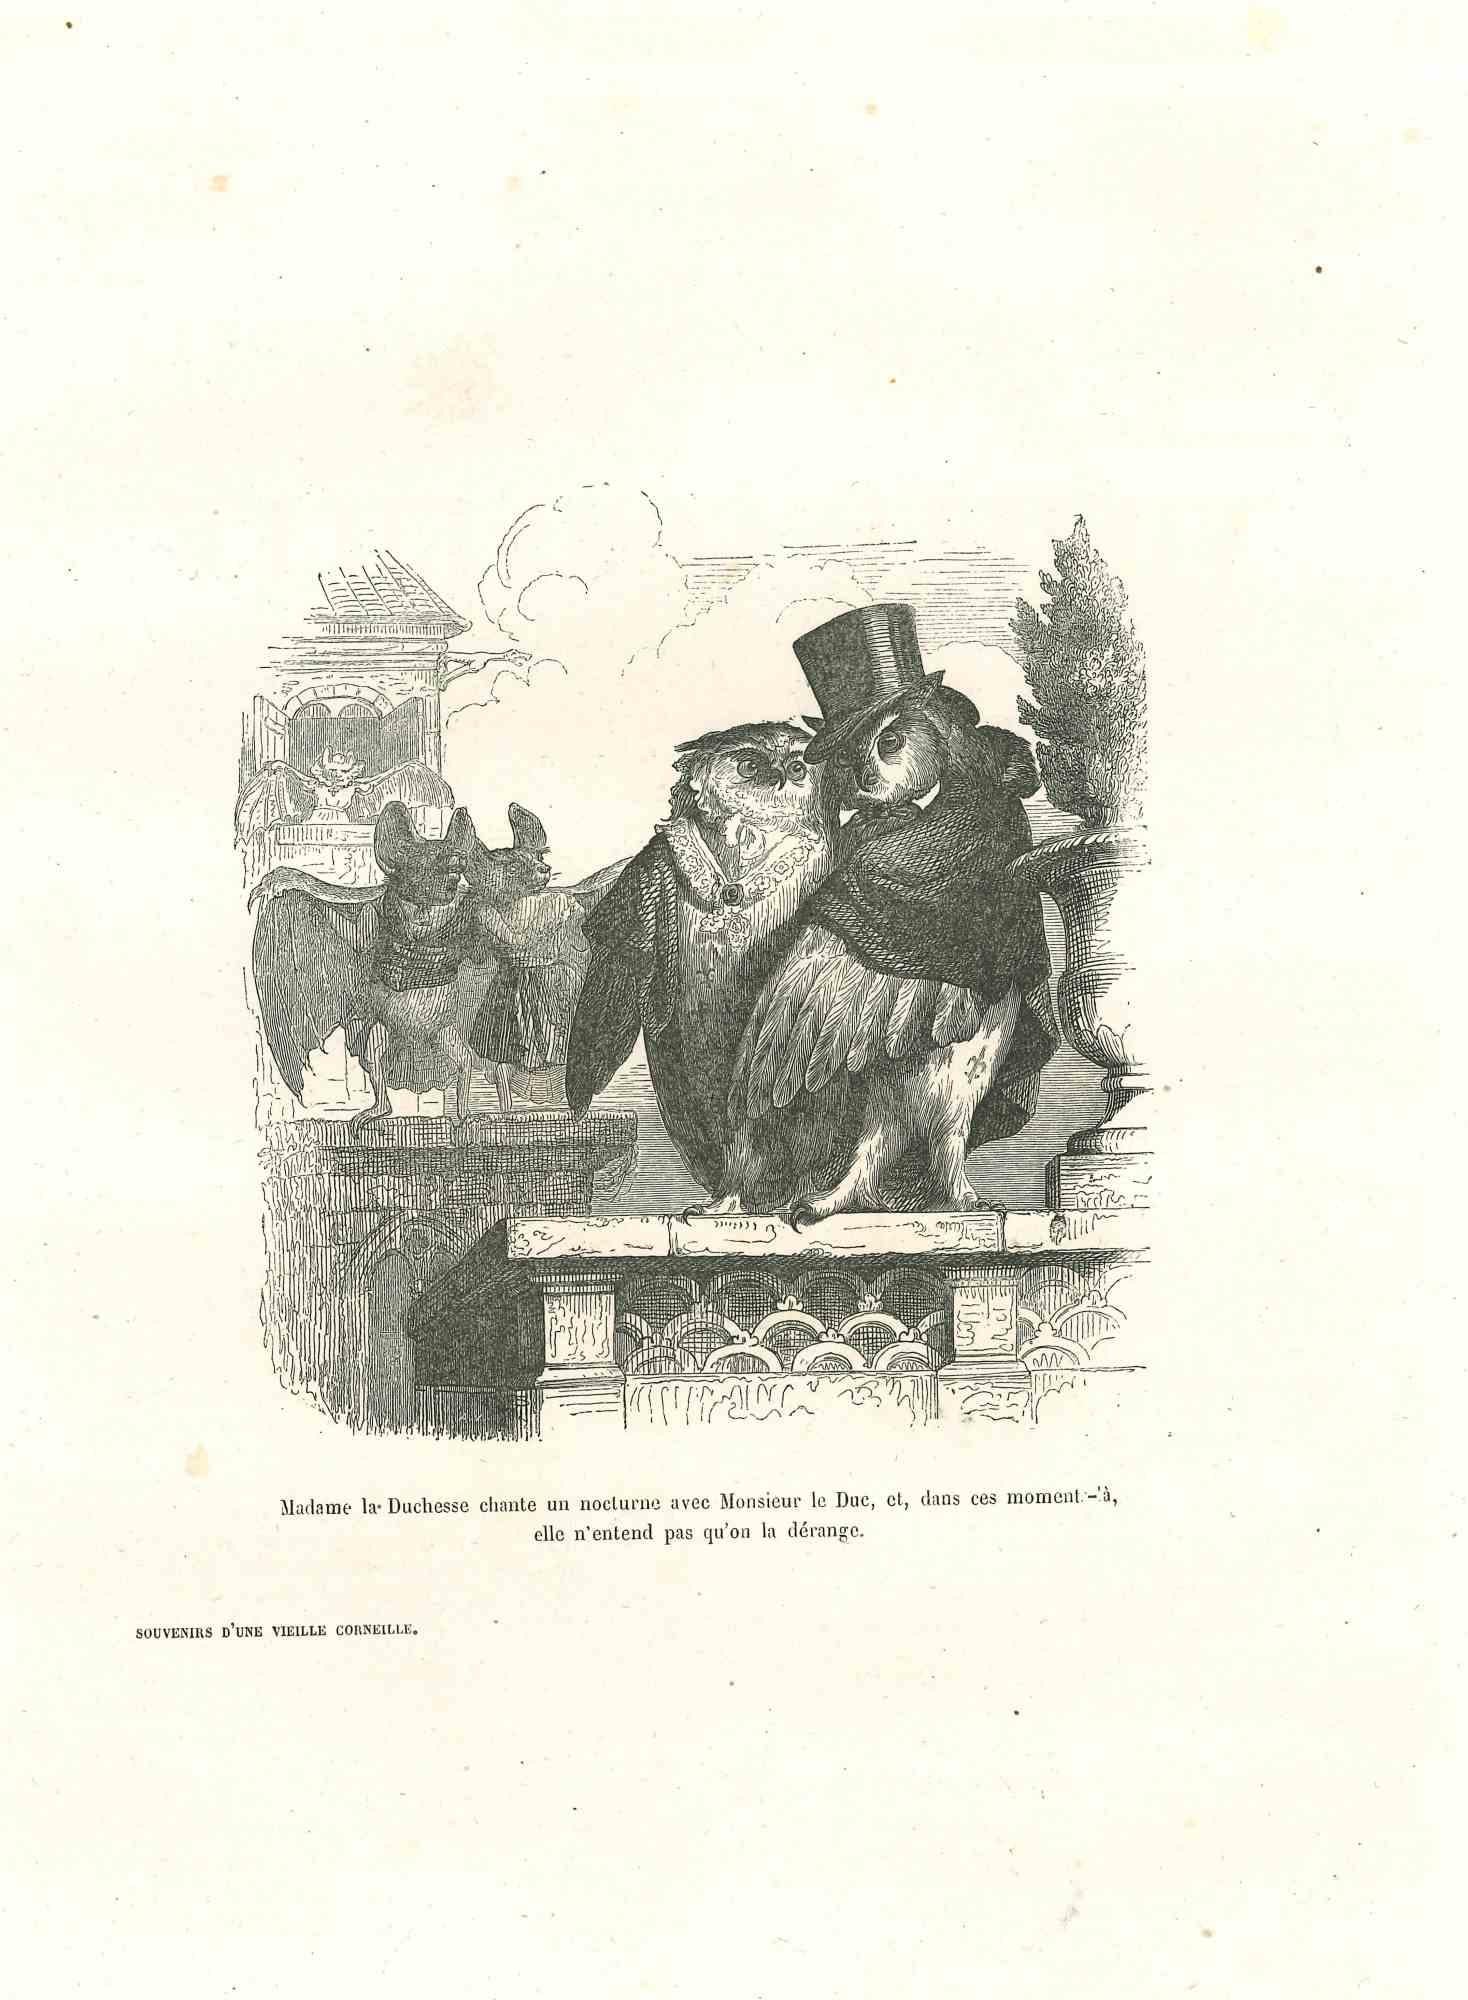 Jean Jeacques Grandville Animal Print - The Duchess Owl Sings For The Duke Owl - Lithograph by J.J Grandville - 1852